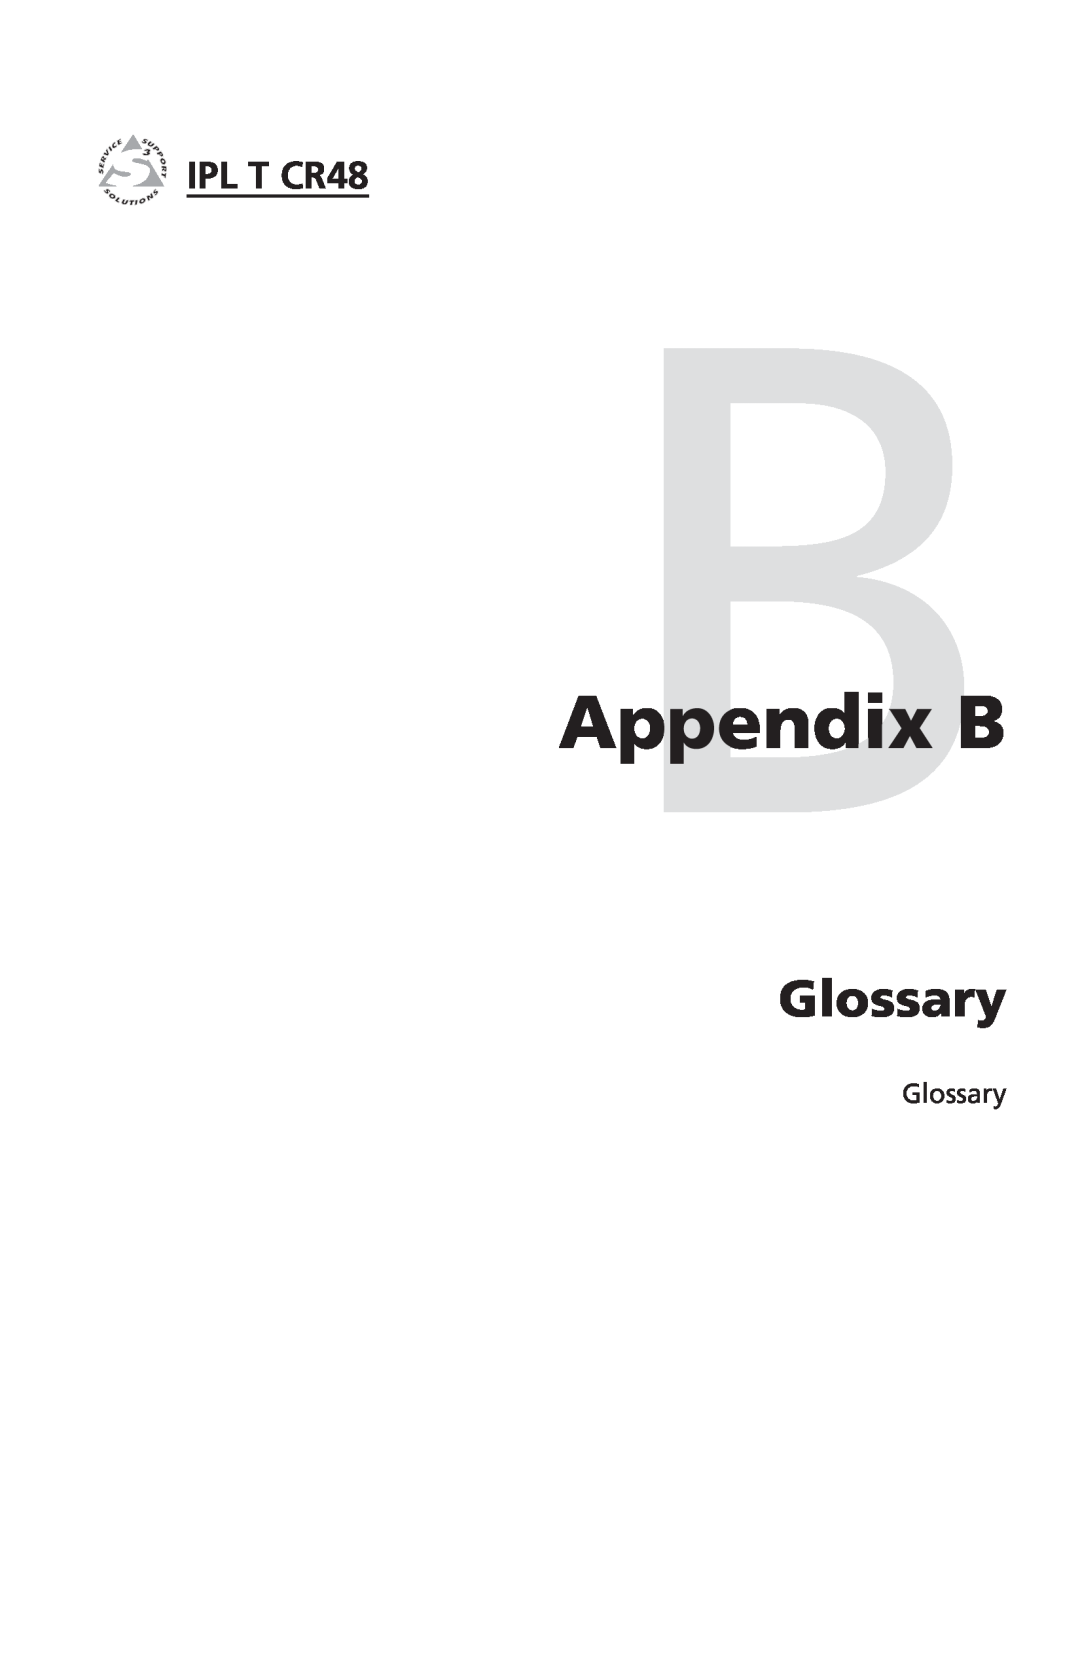 Extron electronic IPL T CR48 manual AppendixBB, Glossary 